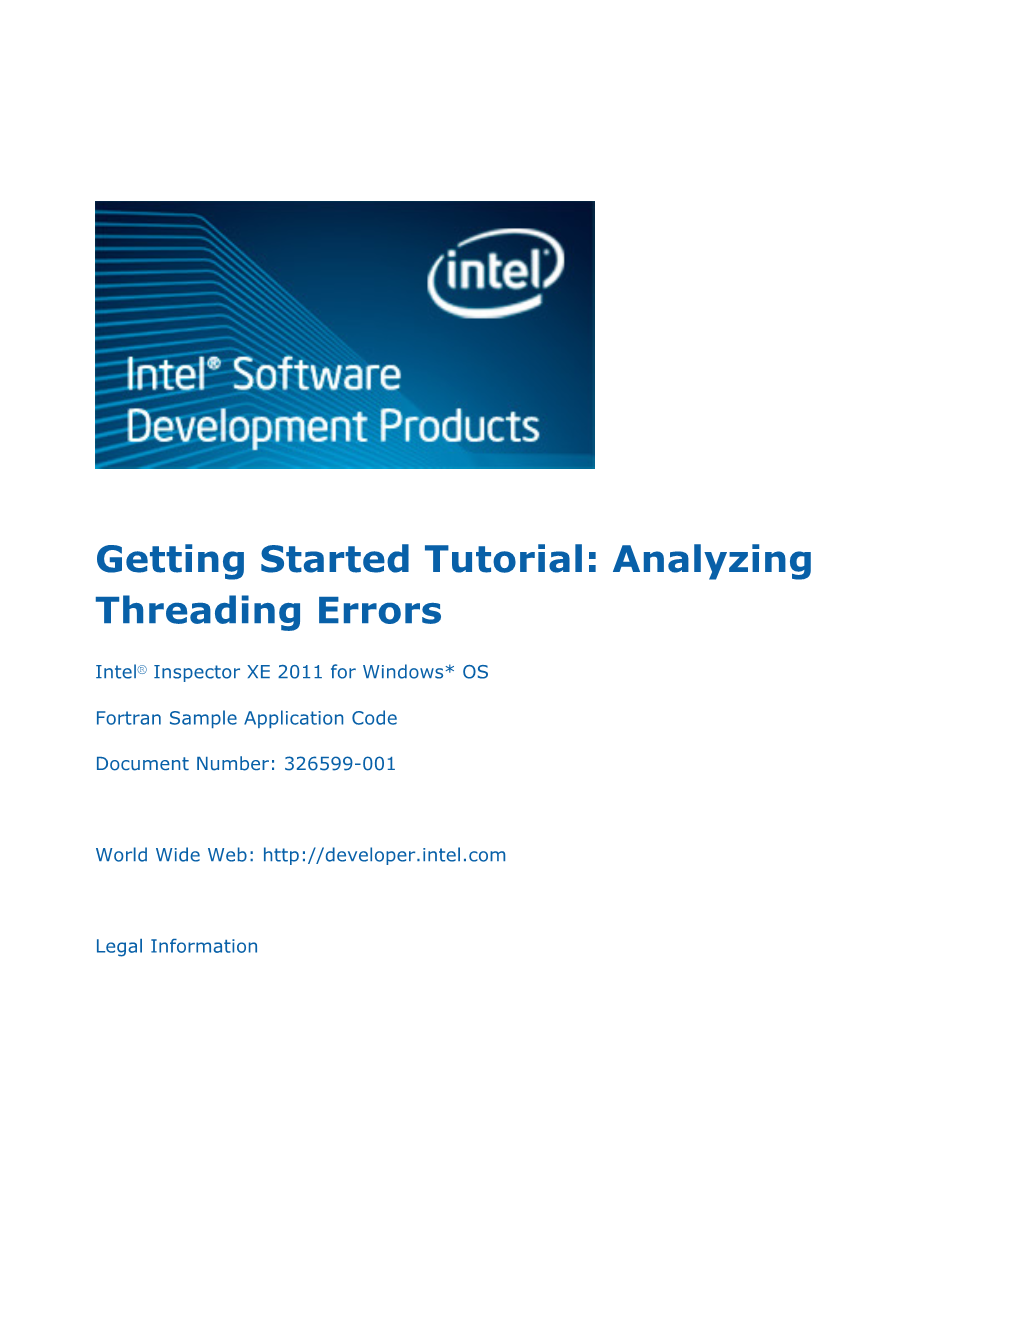 Analyzing Threading Errors